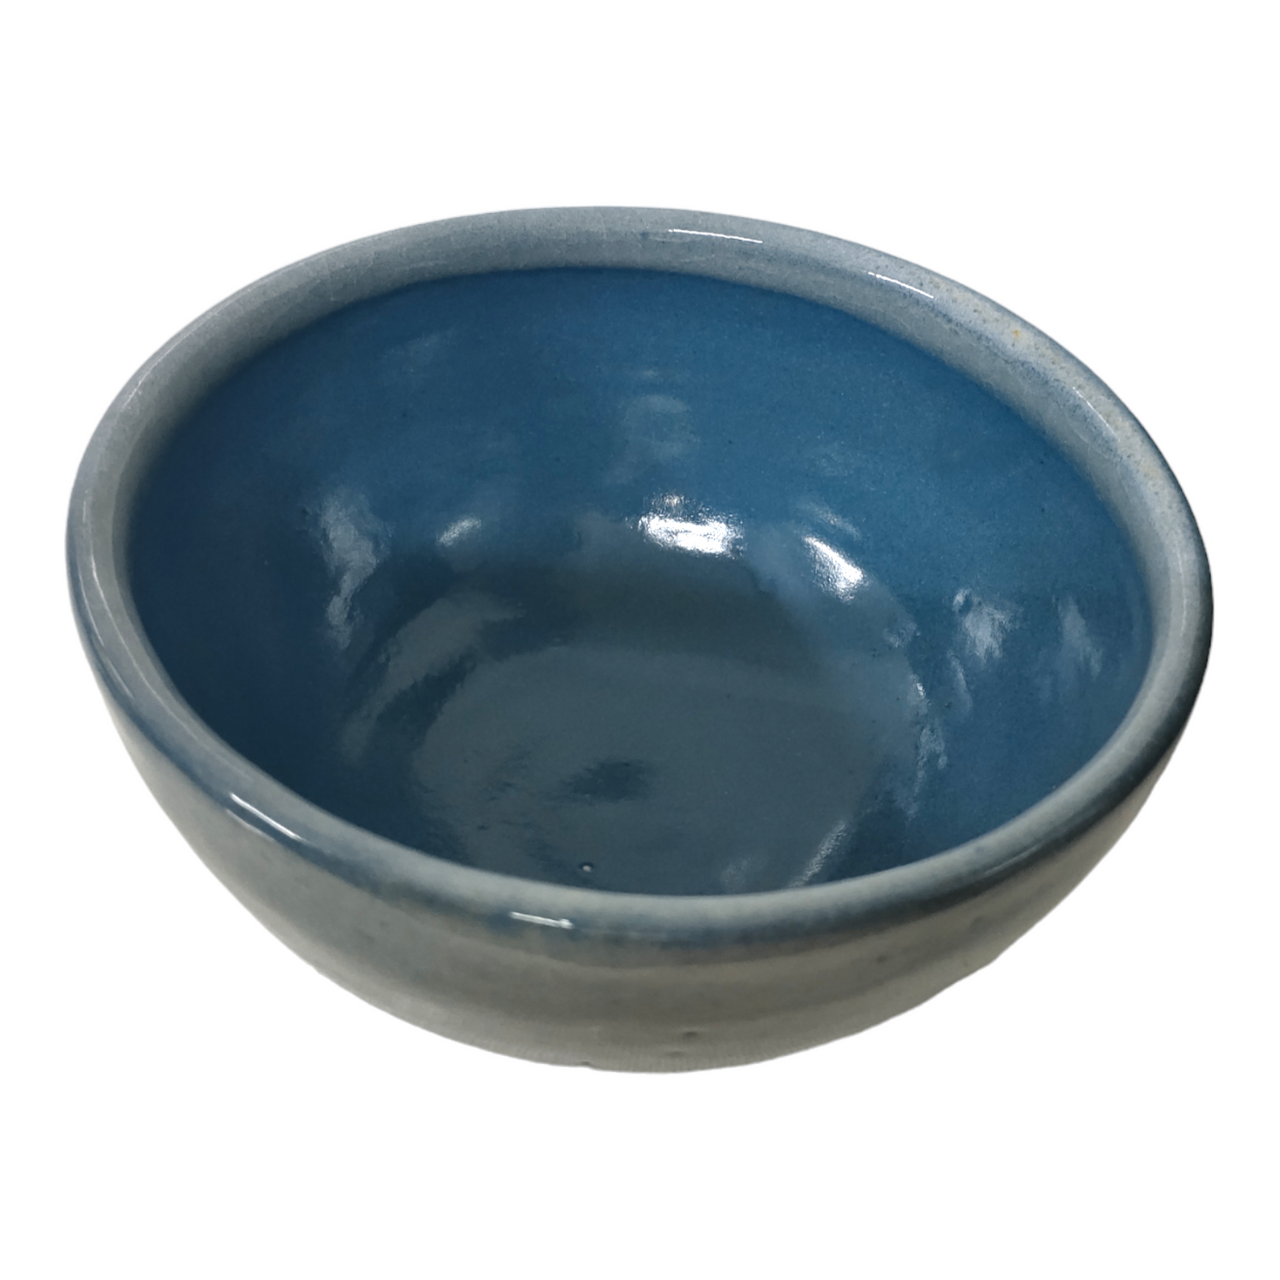 Blue ceramic serving bowl